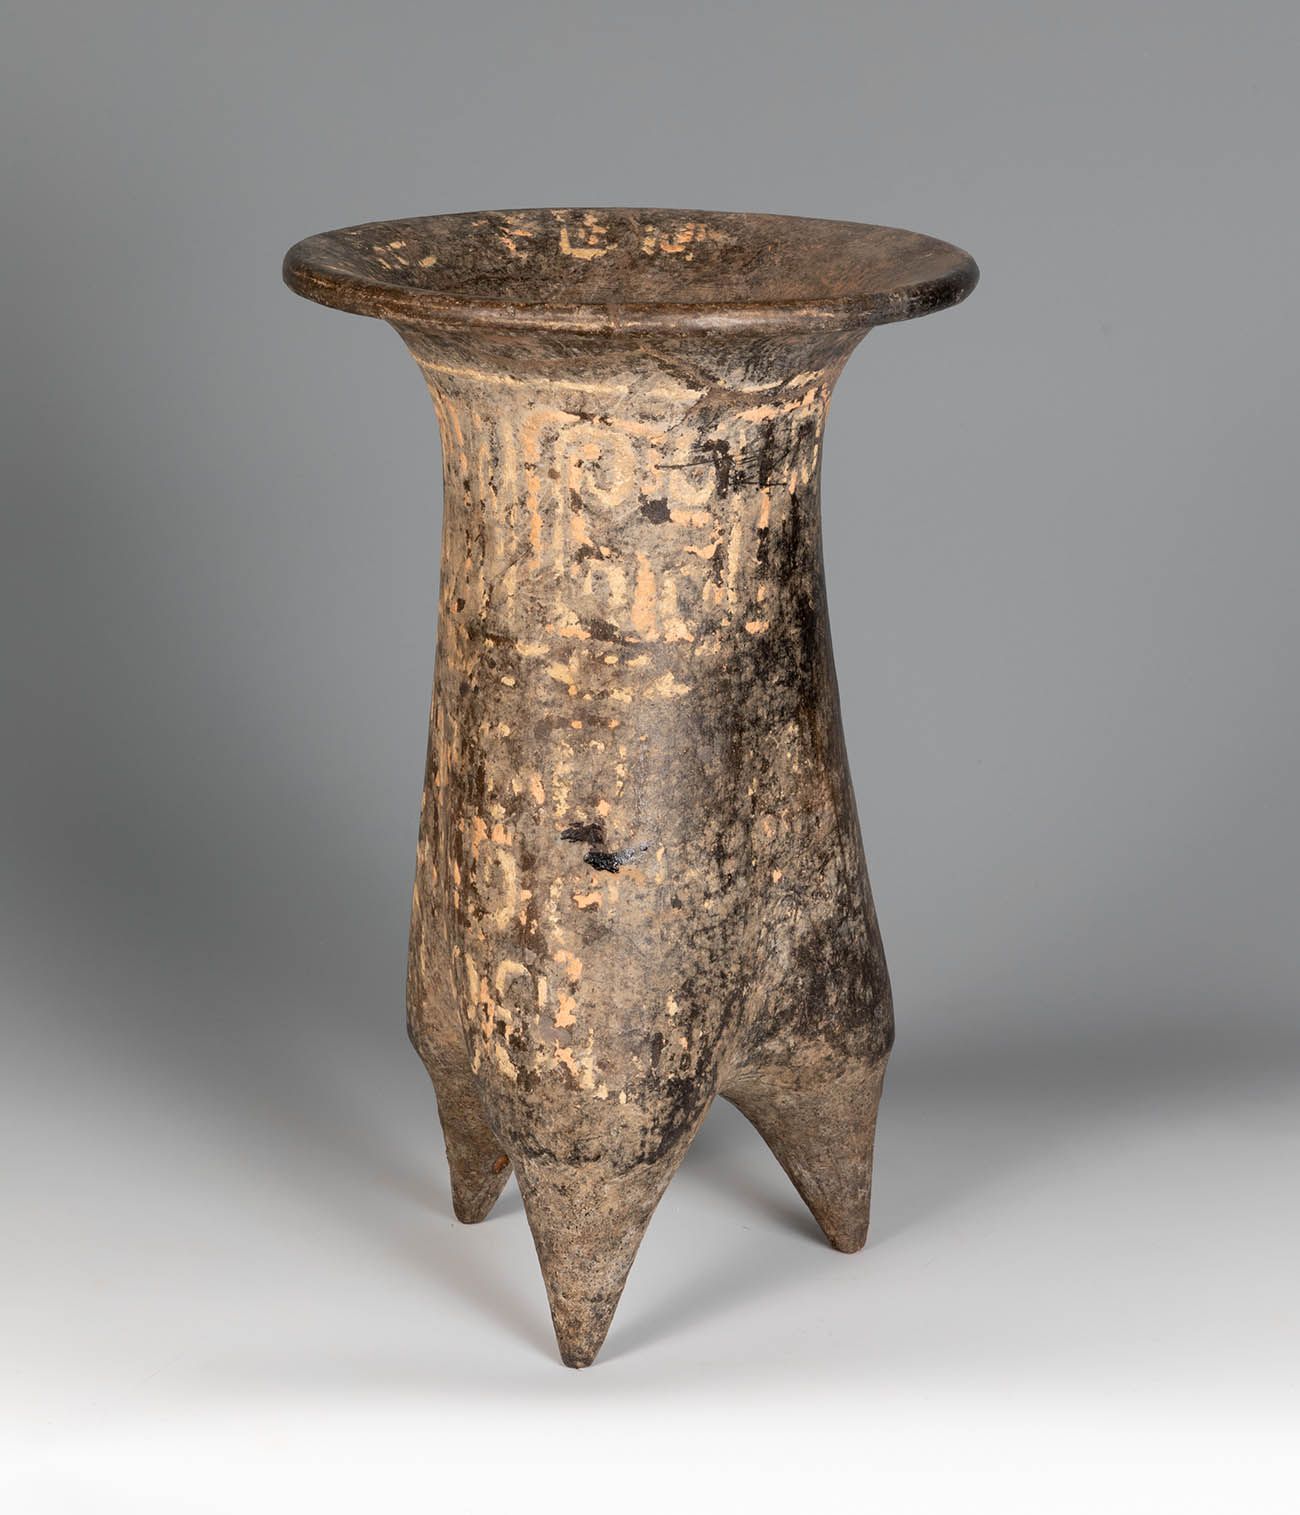 Null Tripod vessel type li. China, late Neolithic, 6500-1600 BC).
Decorated pott&hellip;